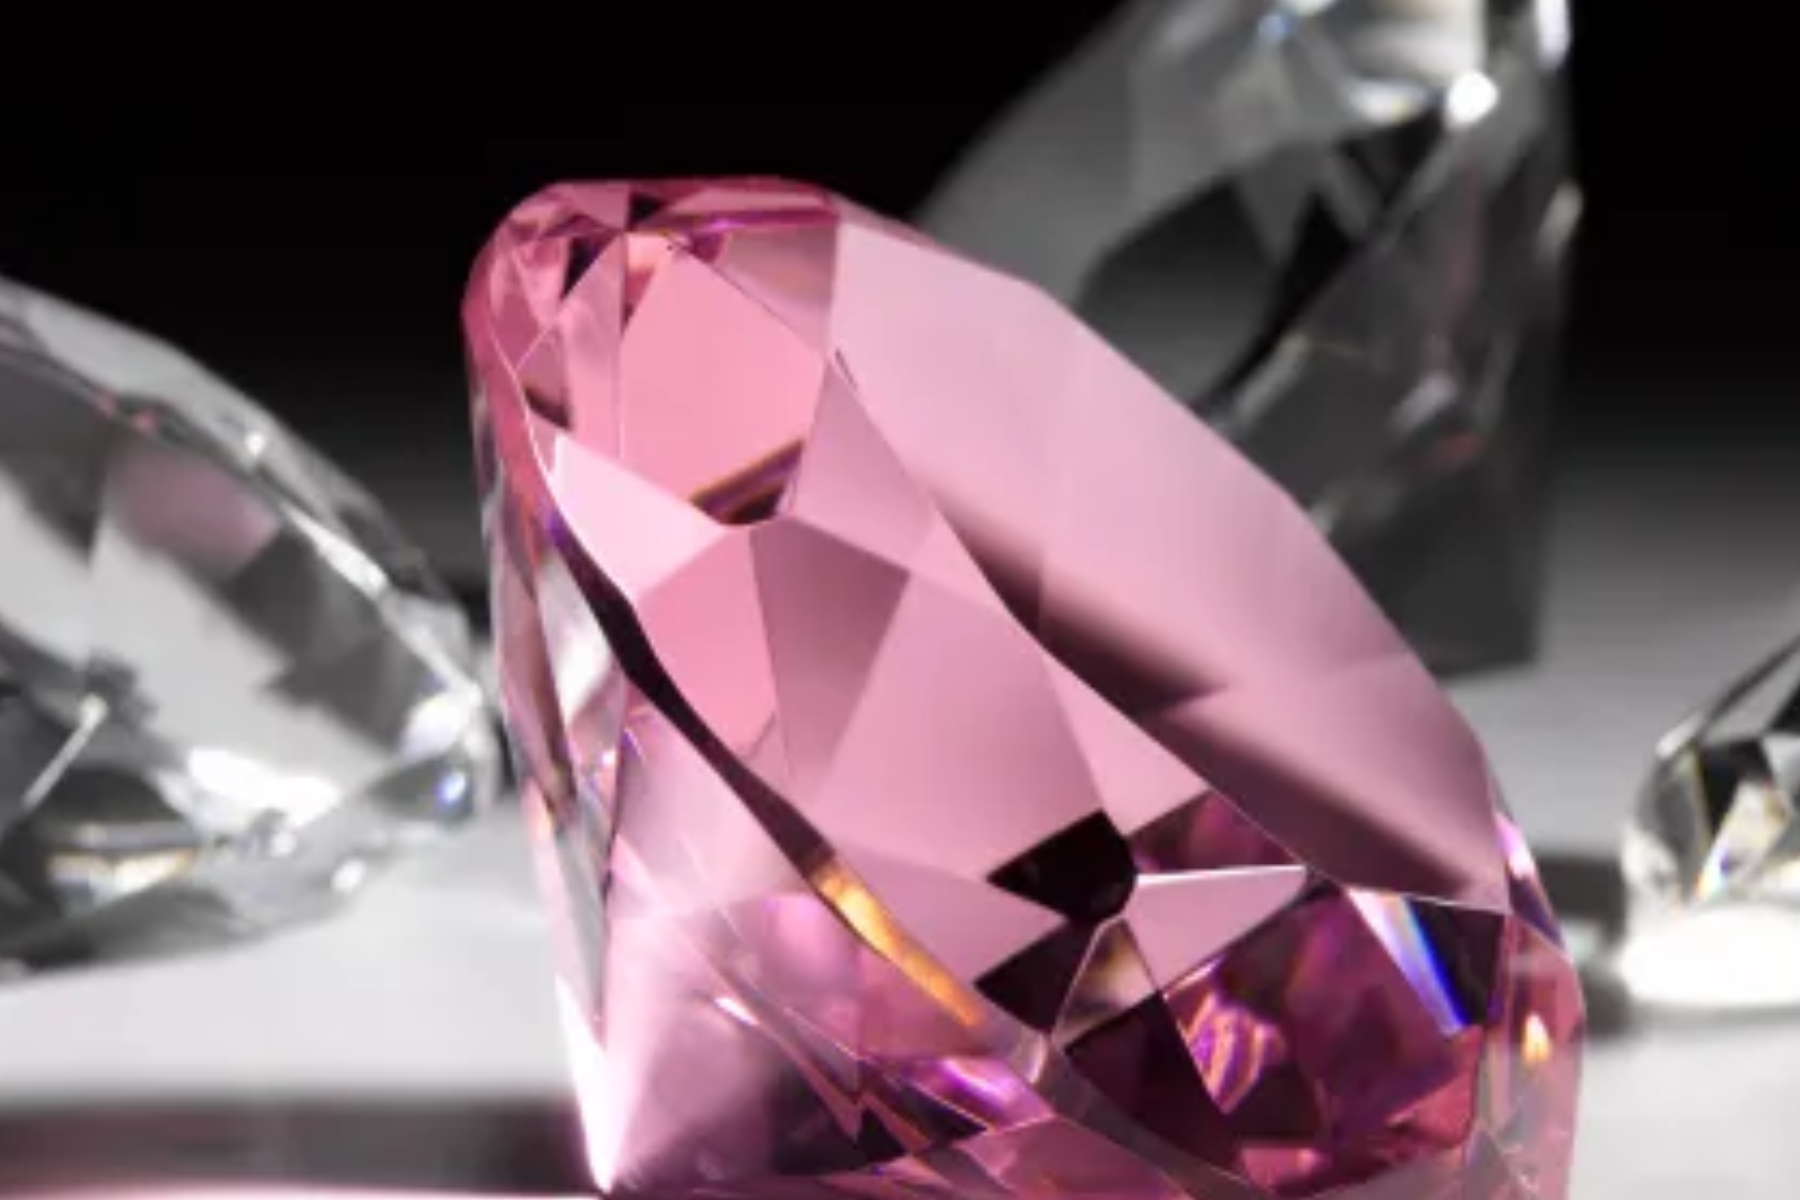 A massive pink diamond